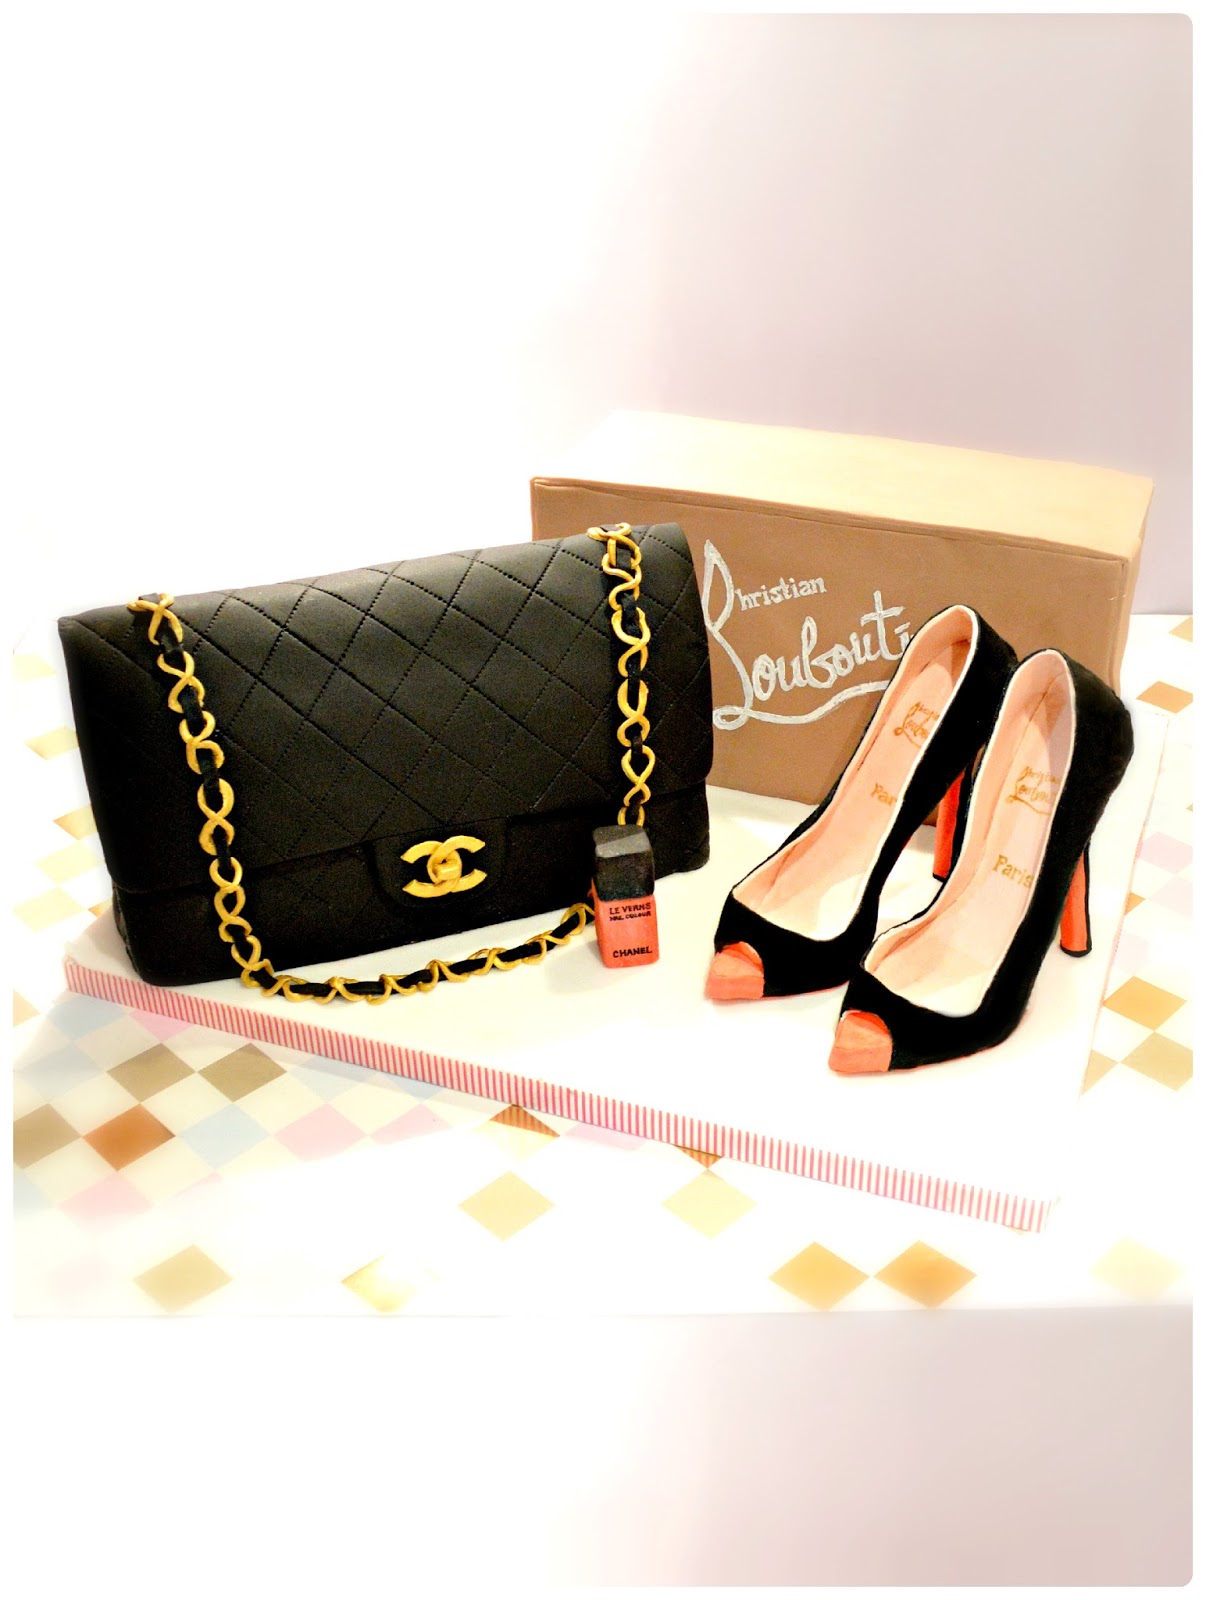 Chanel Handbag and Louboutin High Heels Shoe Cake